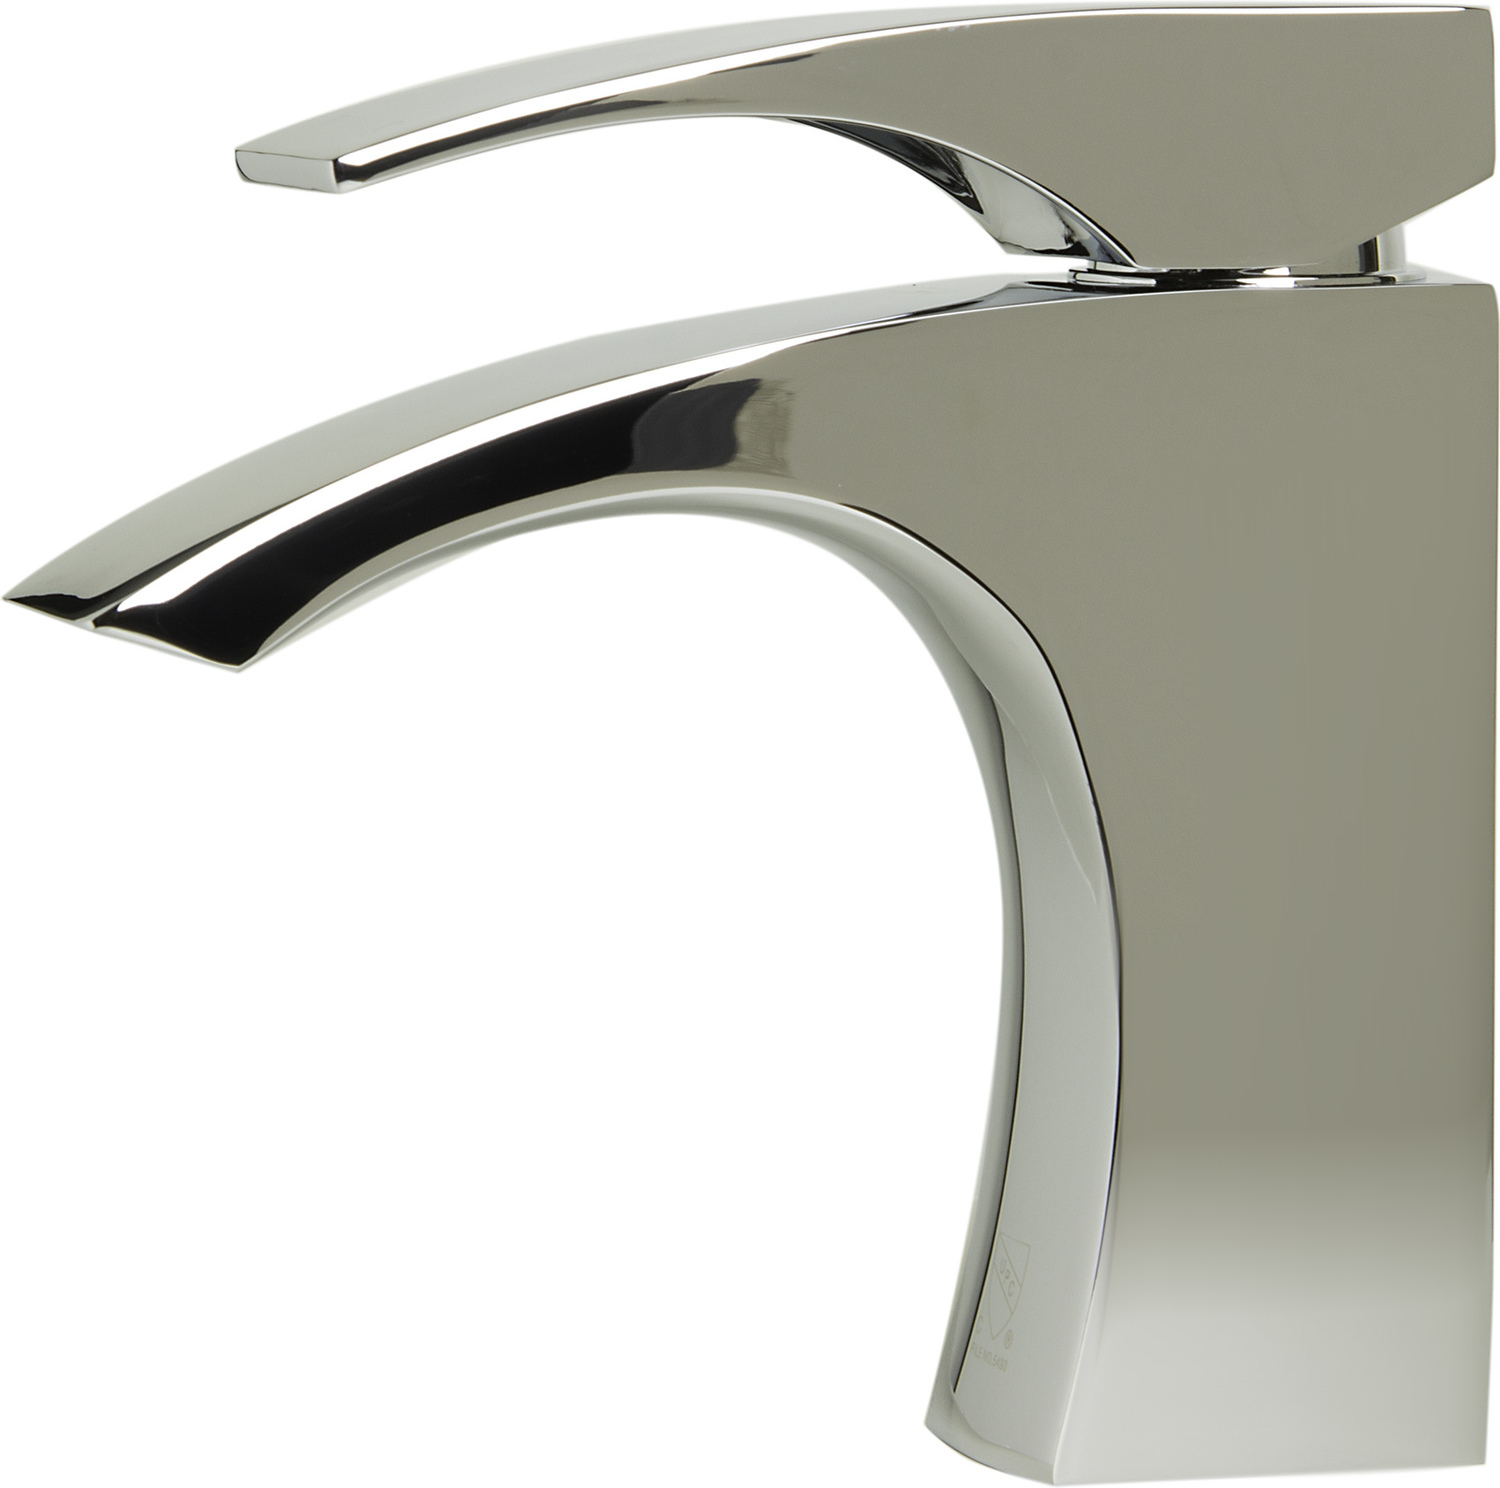 faucet shower Alfi Bathroom Faucet Polished Chrome Modern